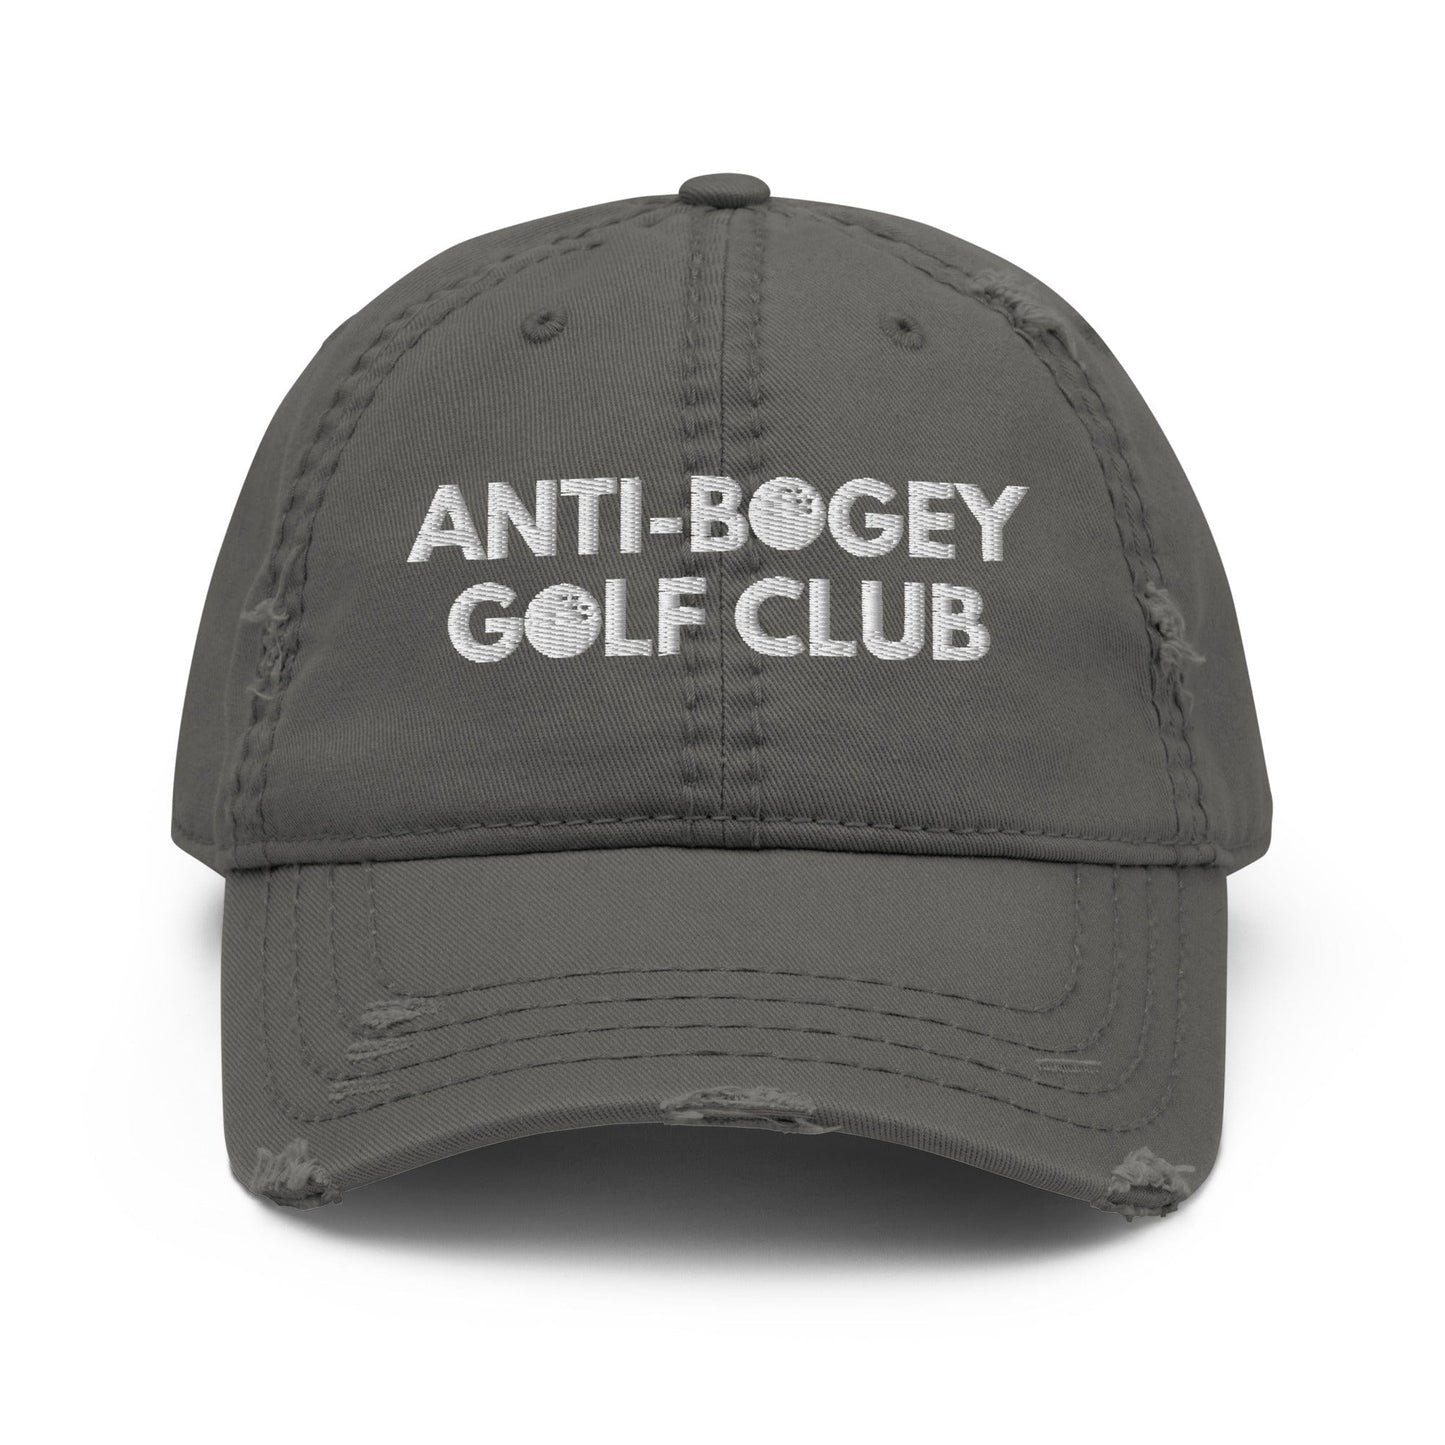 Funny Golfer Gifts  Distressed Cap Charcoal Grey Anti-Bogey Golf Club Hat Distressed Hat